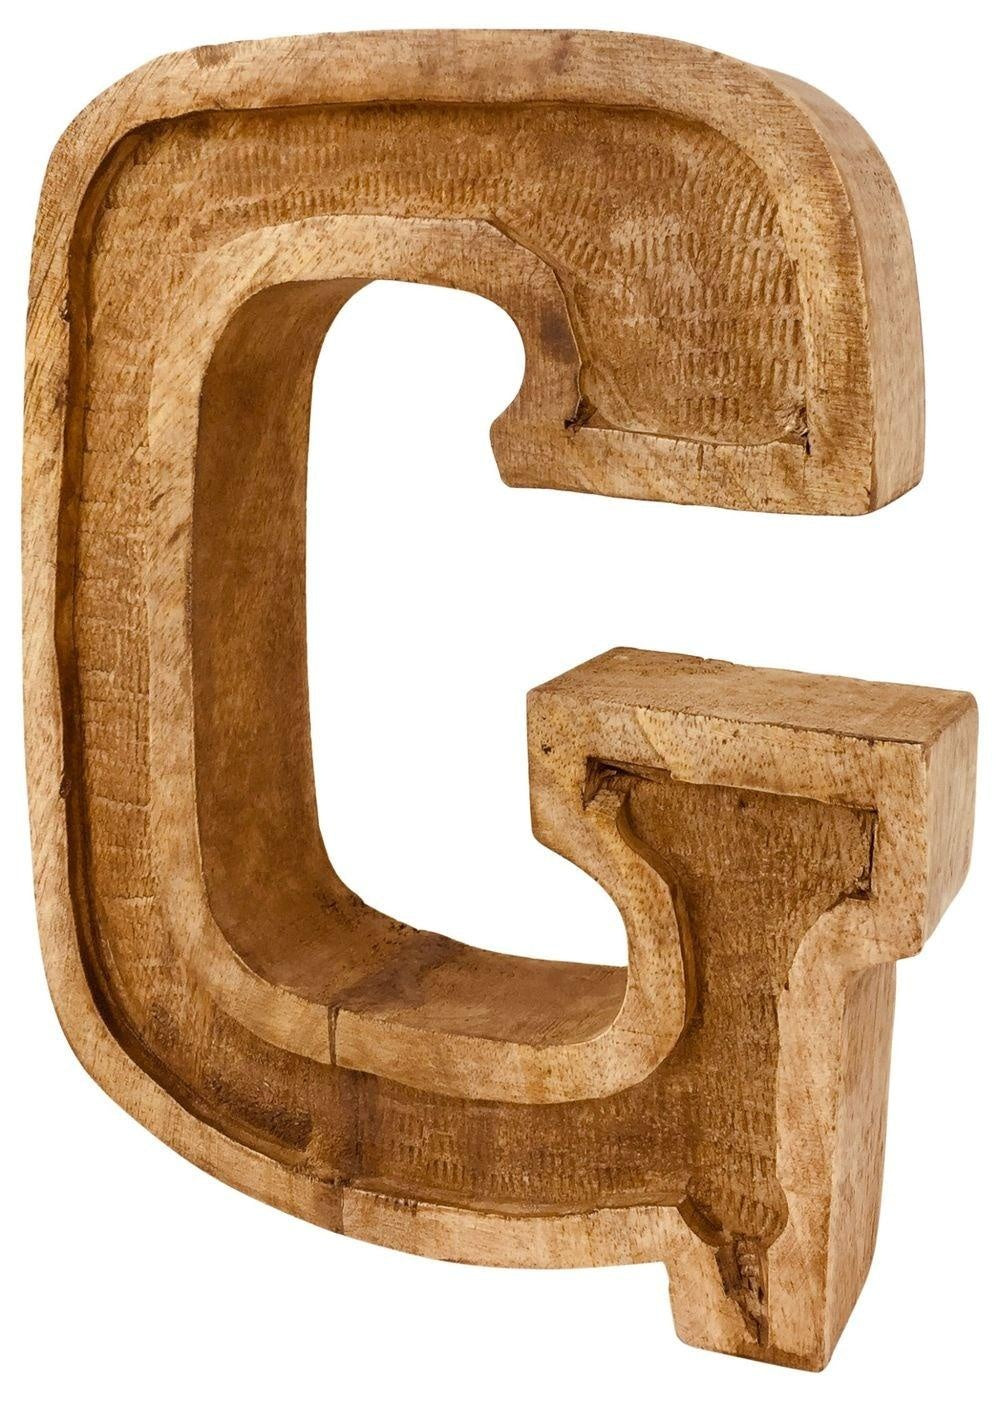 Hand Carved Wooden Embossed Letter G